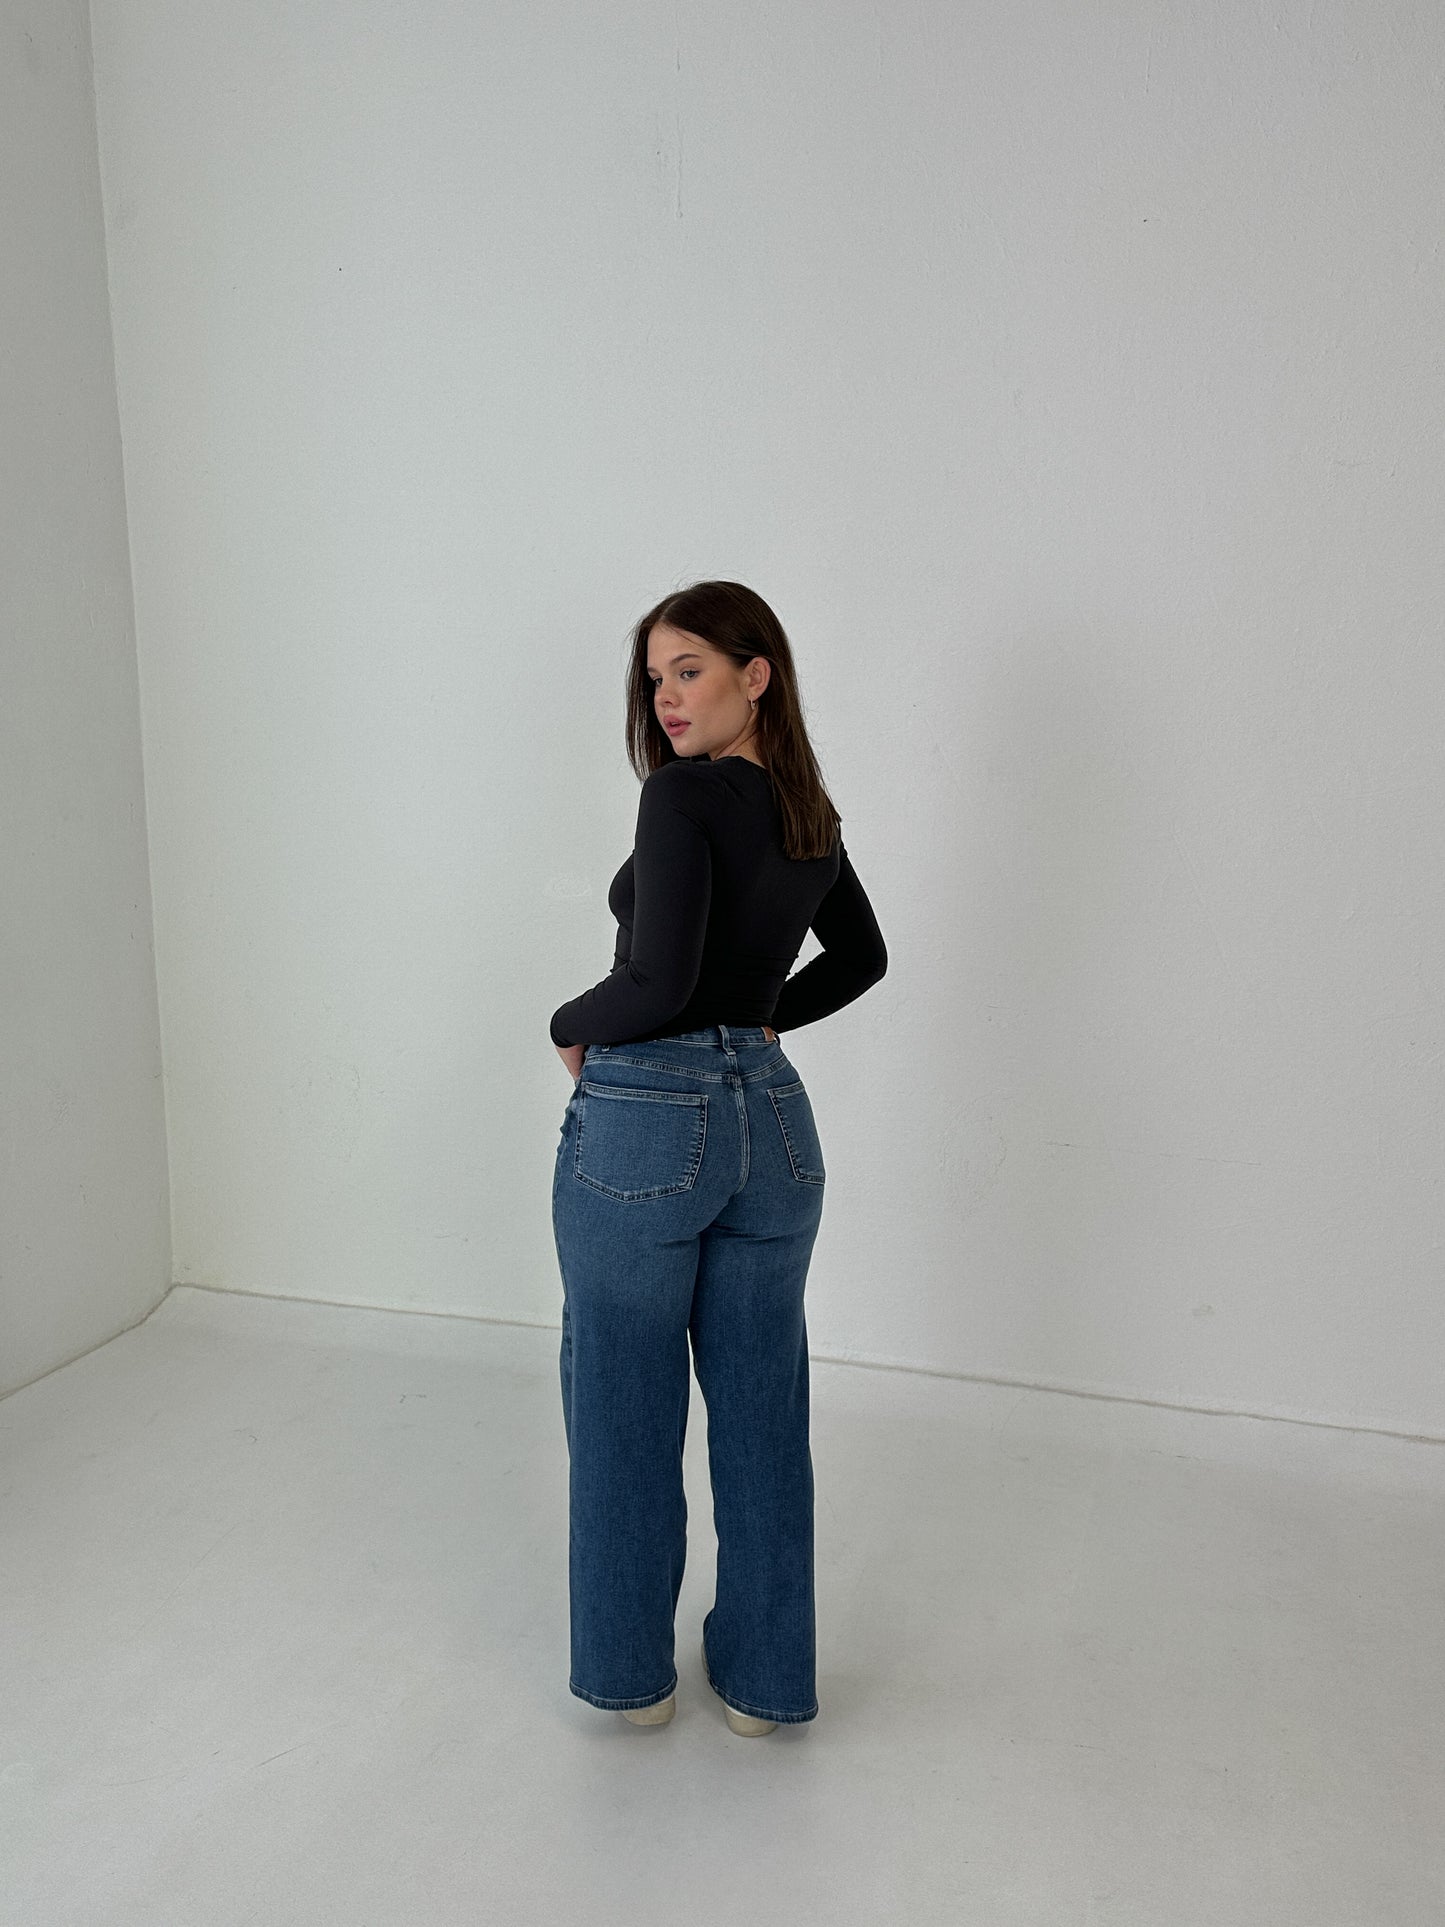 ONLMADISON BLUSH HW Wide Jeans - CRO372